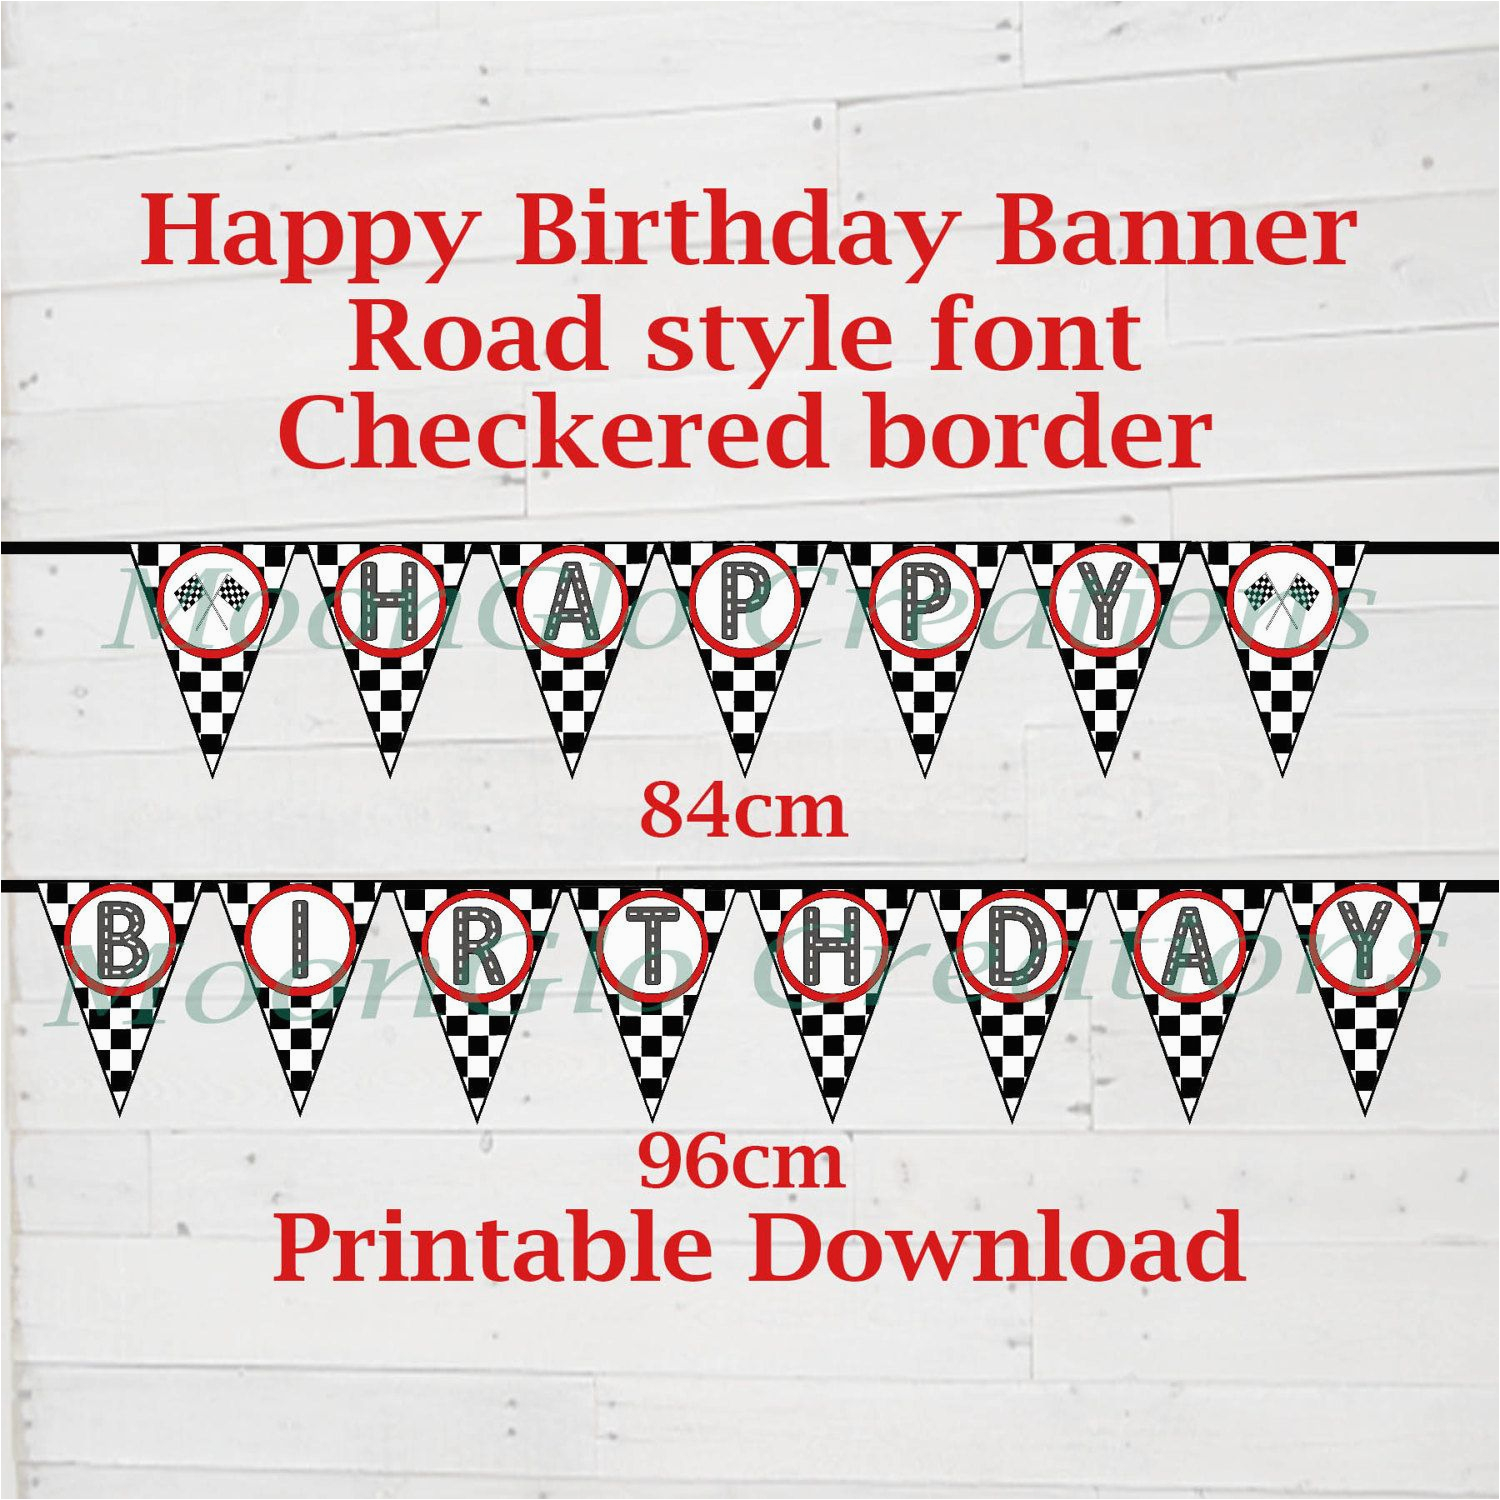 Happy Birthday Banner Font Race Car theme 39 Happy Birthday 39 Banner Road Font